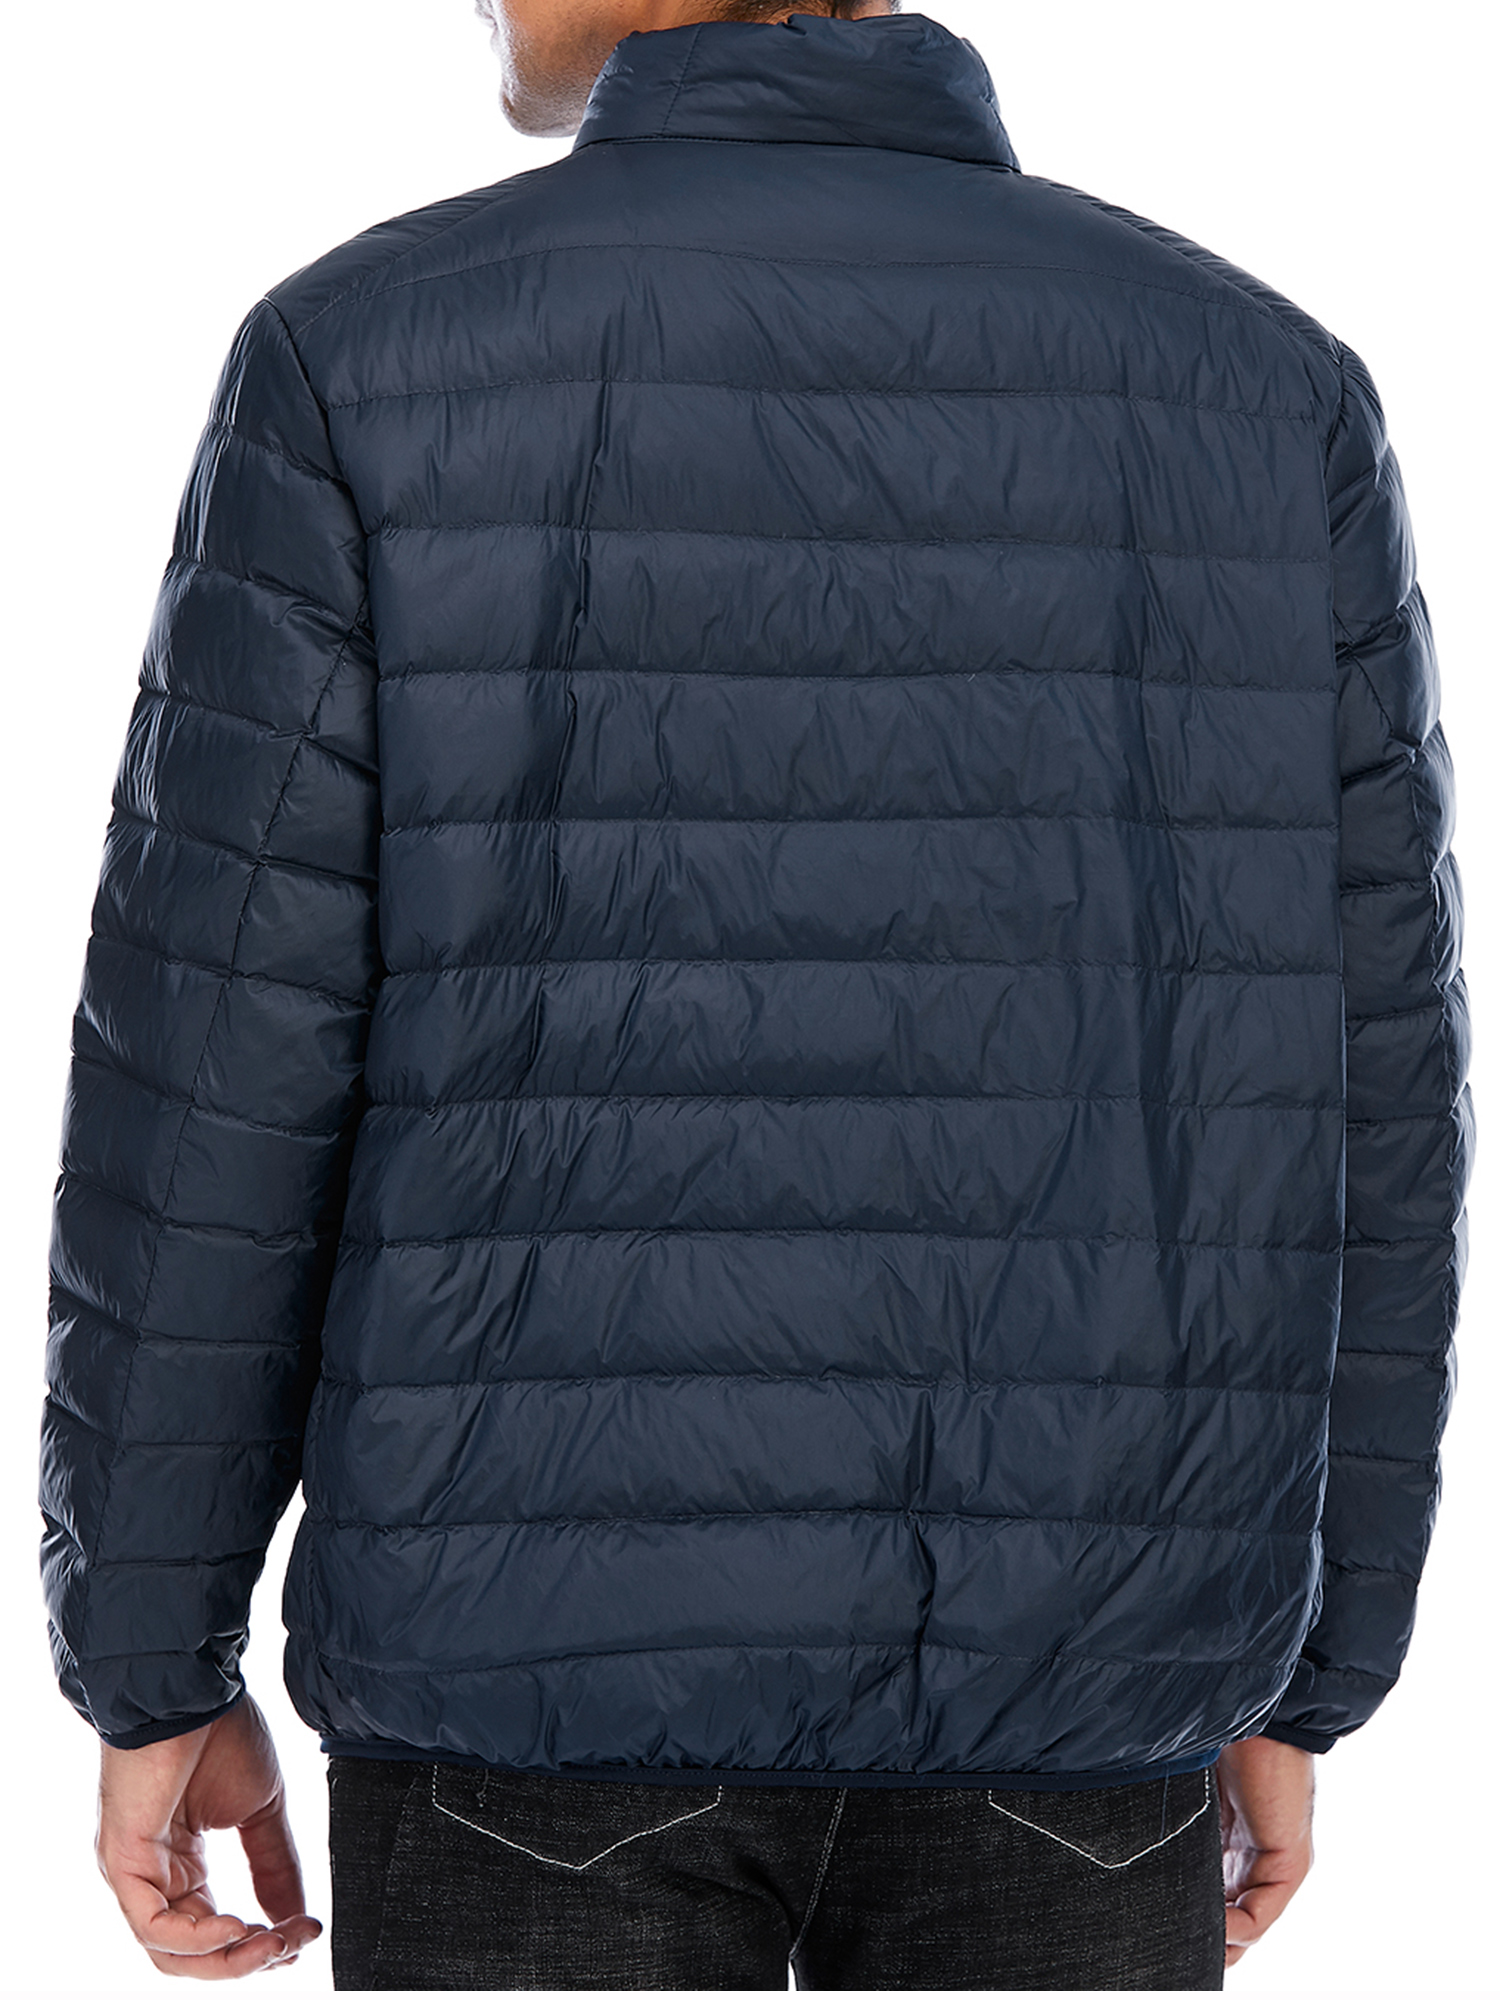 FOCUSSEXY Mens Down Jacket Mens Outwear Puffer Coats Zip Up Windbreaker Lightweight Winter Jackets Packable Warm Coat Stretch Winter Coat - image 2 of 7